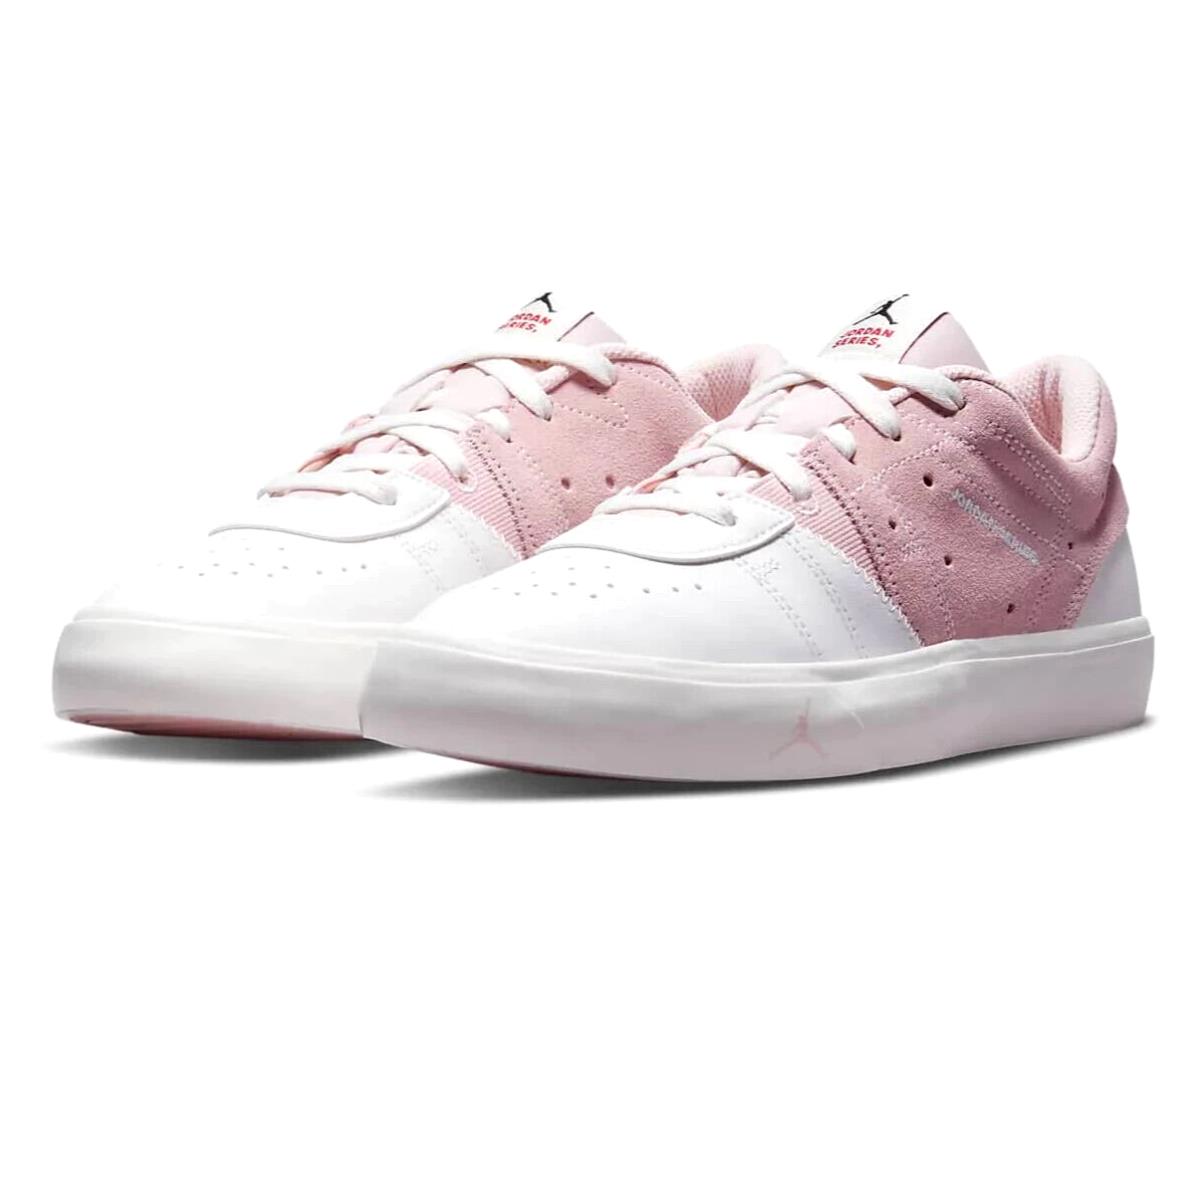 Nike Jordan Series ES Mens Size 9 Shoes DN1857 610 Pink Sail Wmn sz 10.5